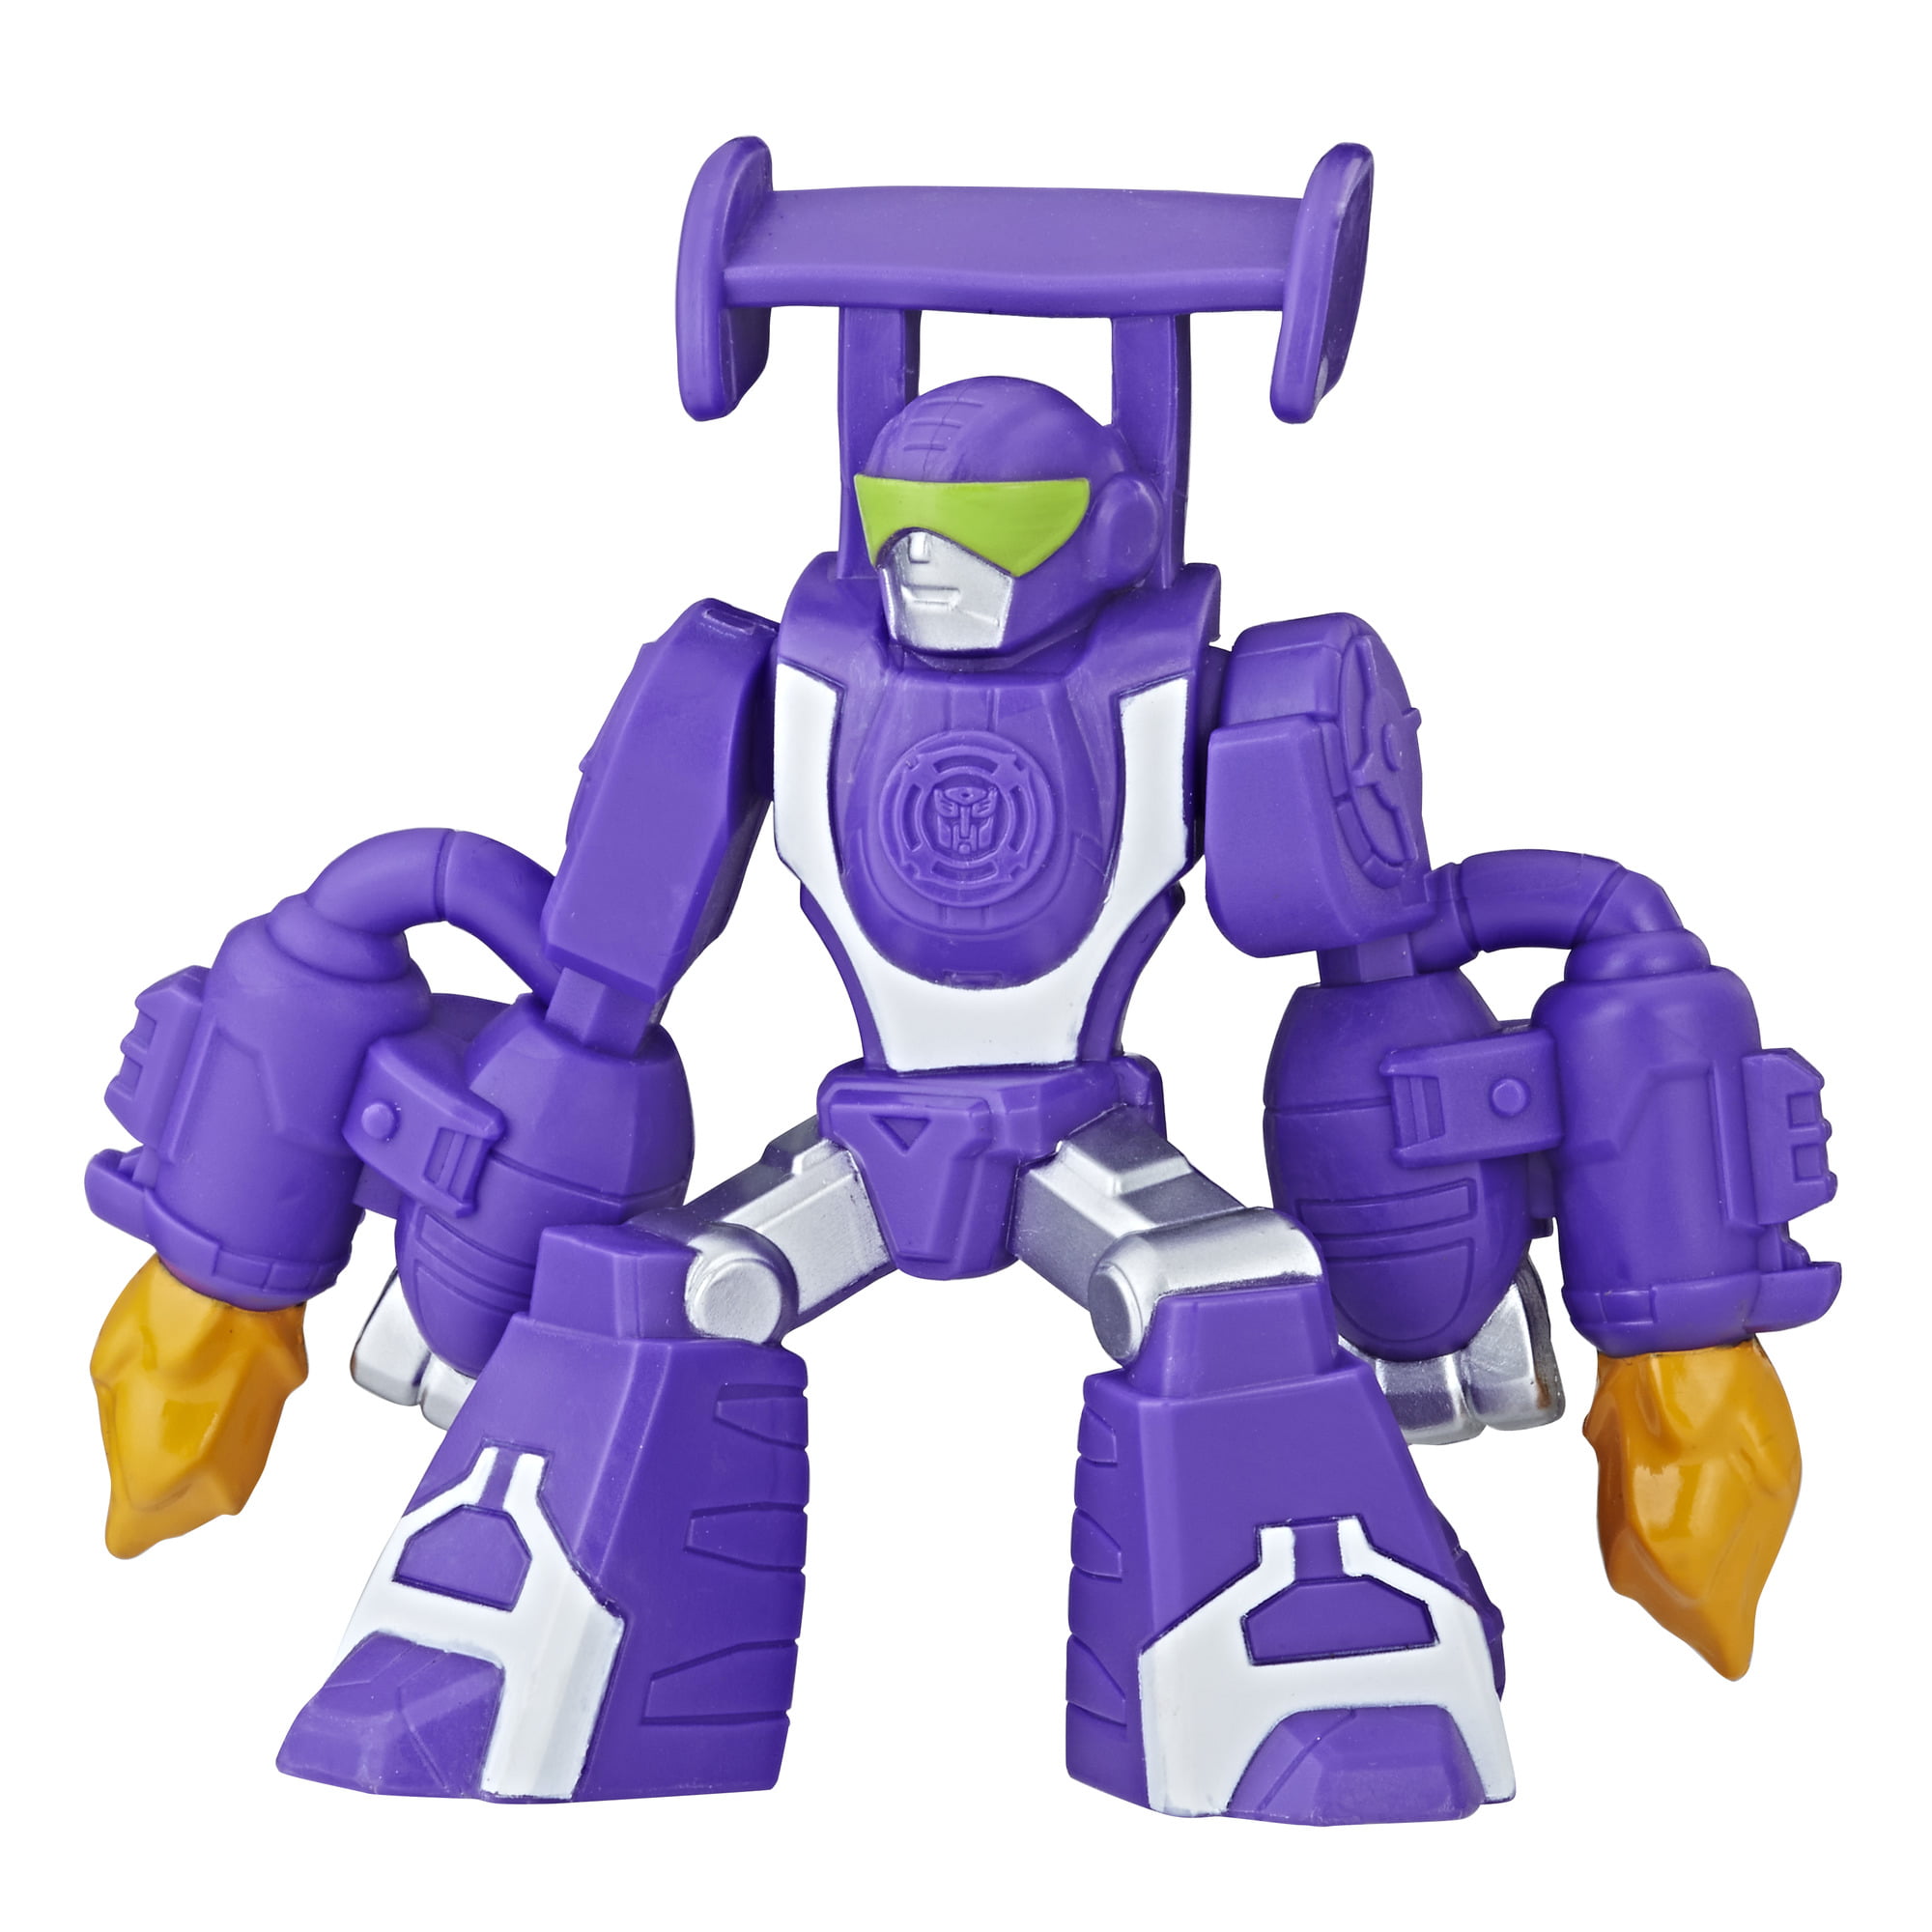 Боты развлечения. Фигурка Hasbro Playskool Heroes Transformers Rescue bots e0026. Игрушка мини трансформер боты спасатели e0026. Трансформеры Хасбро боты спасатели. Трансформеры боты спасатели Академия игрушки.